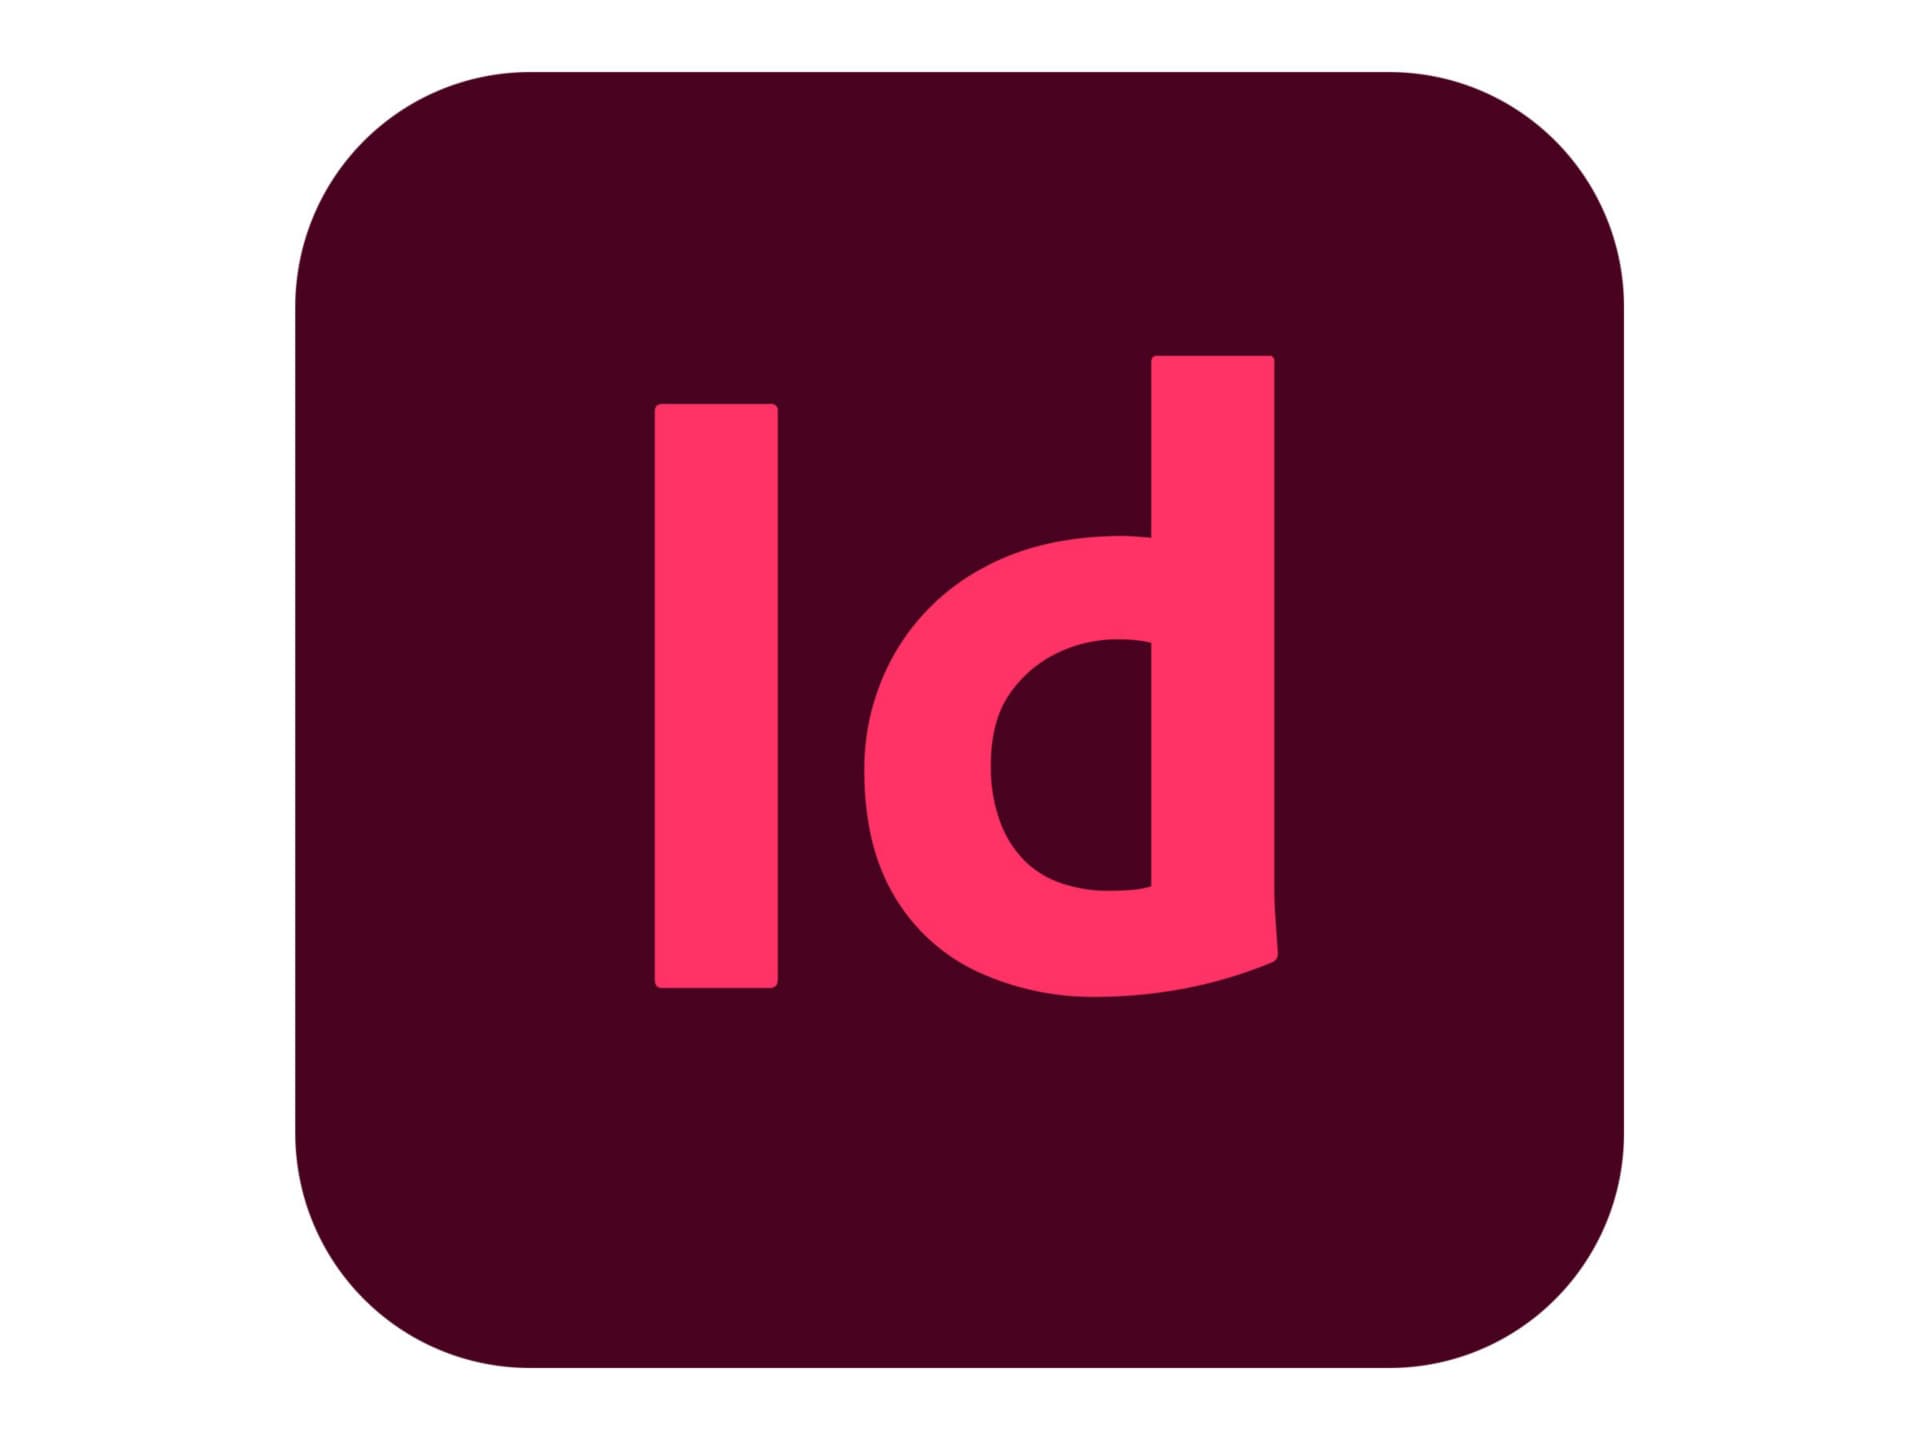 Adobe InDesign CC for Enterprise - Subscription New (5 months) - 1 named user